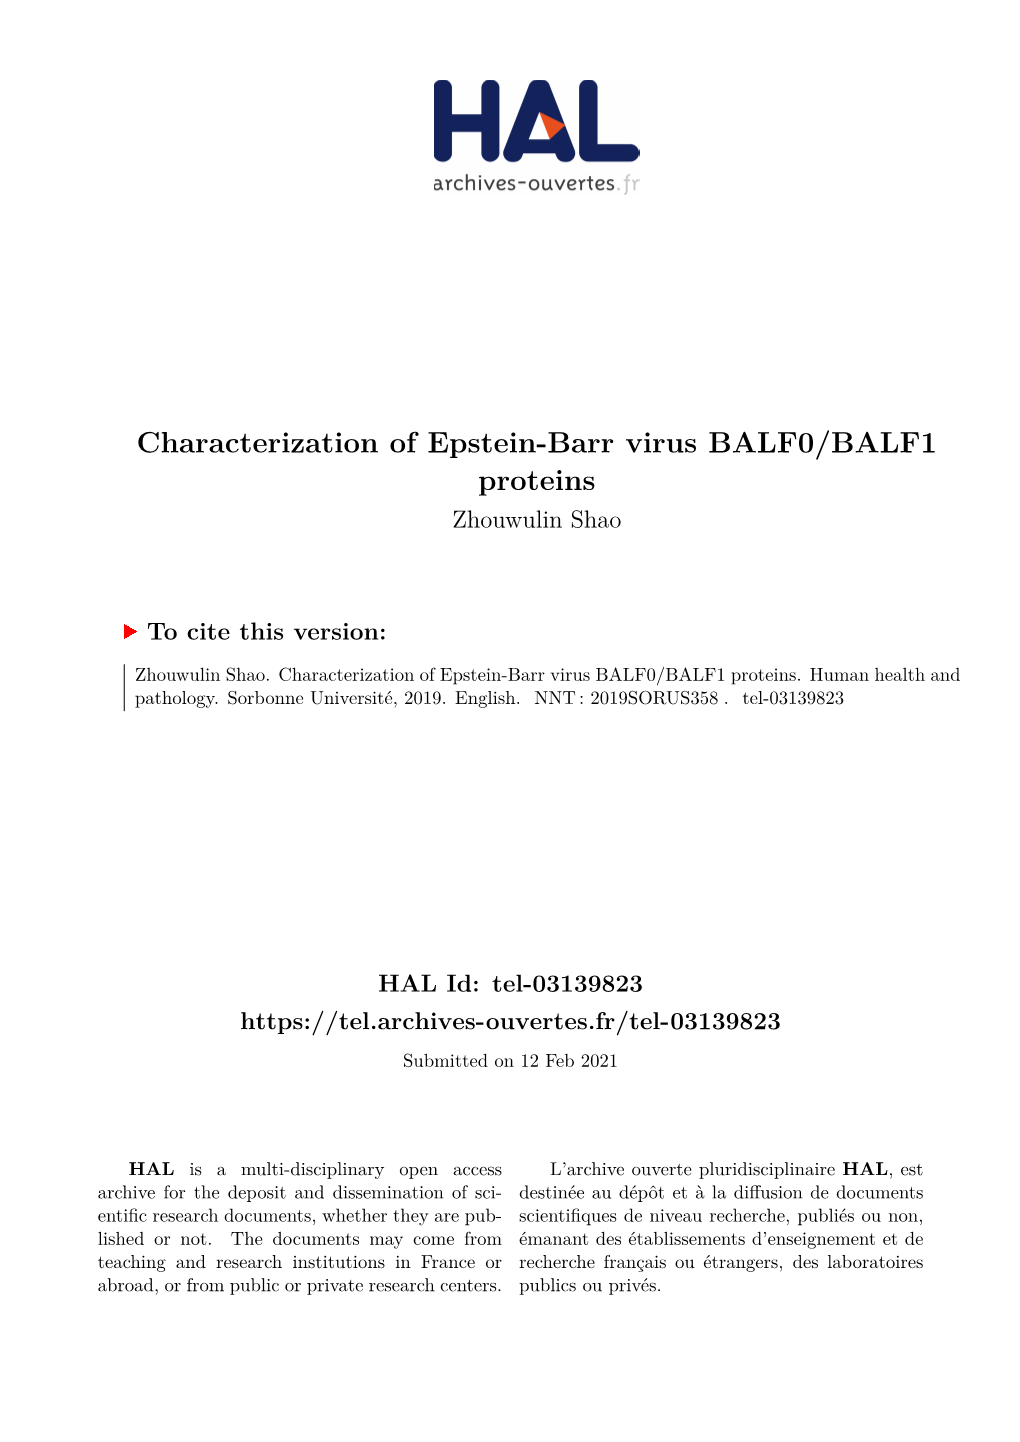 Characterization of Epstein-Barr Virus BALF0/BALF1 Proteins Zhouwulin Shao